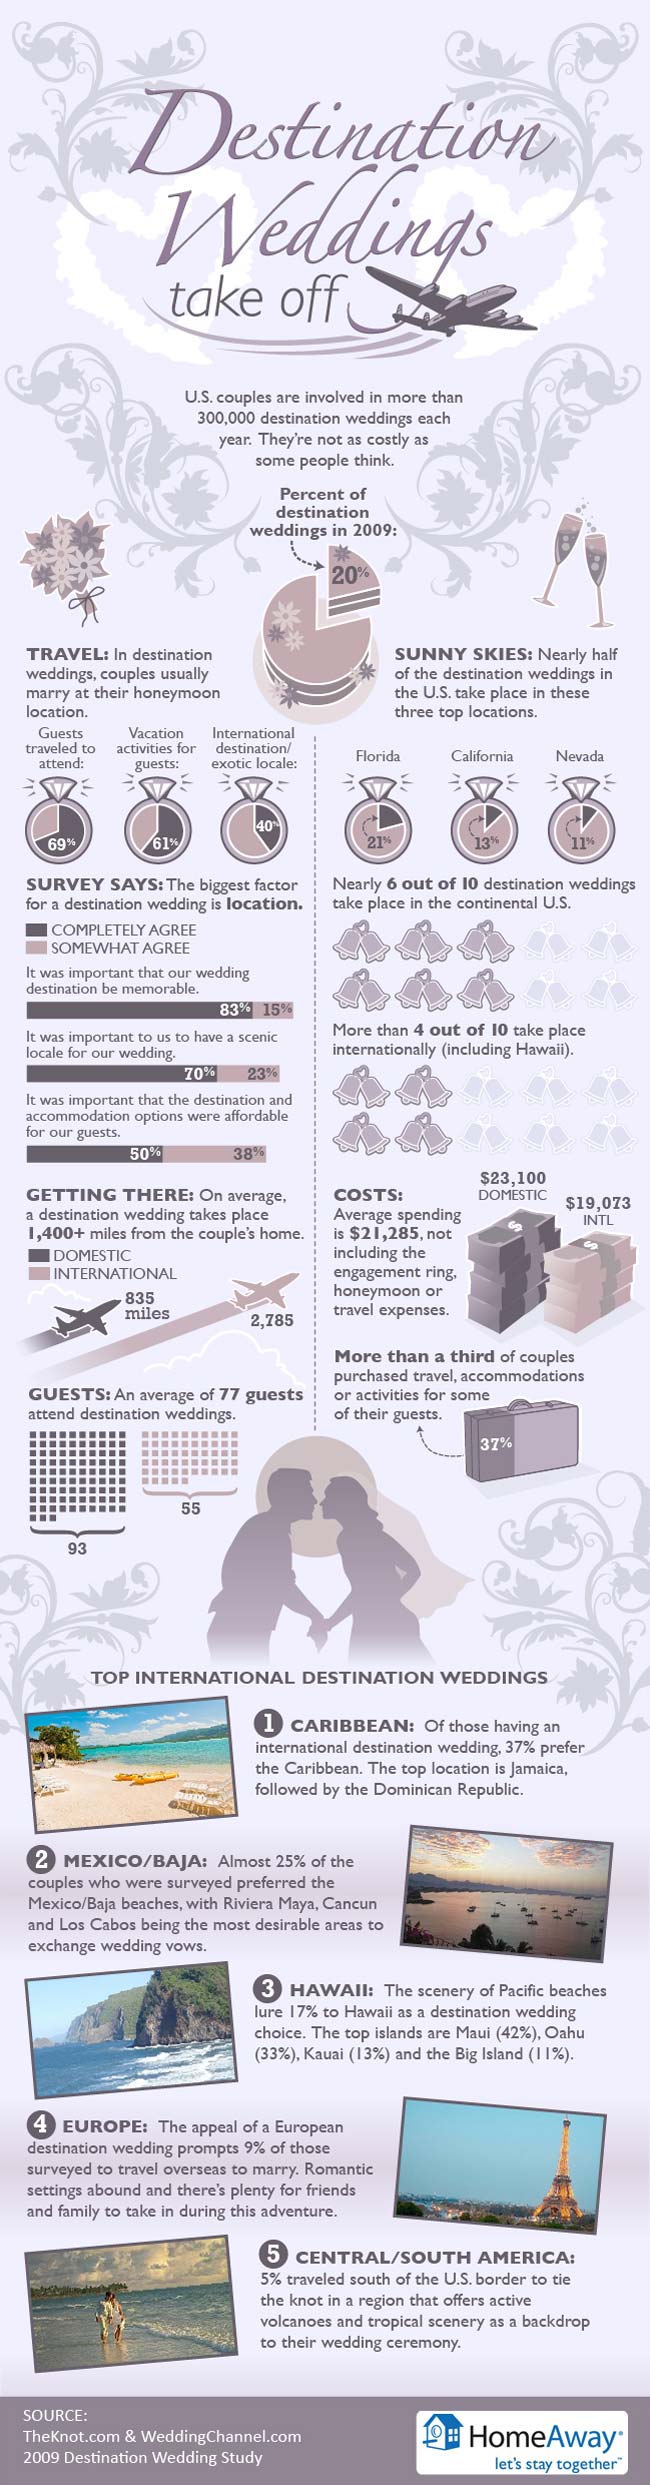 infographic destination wedding facts